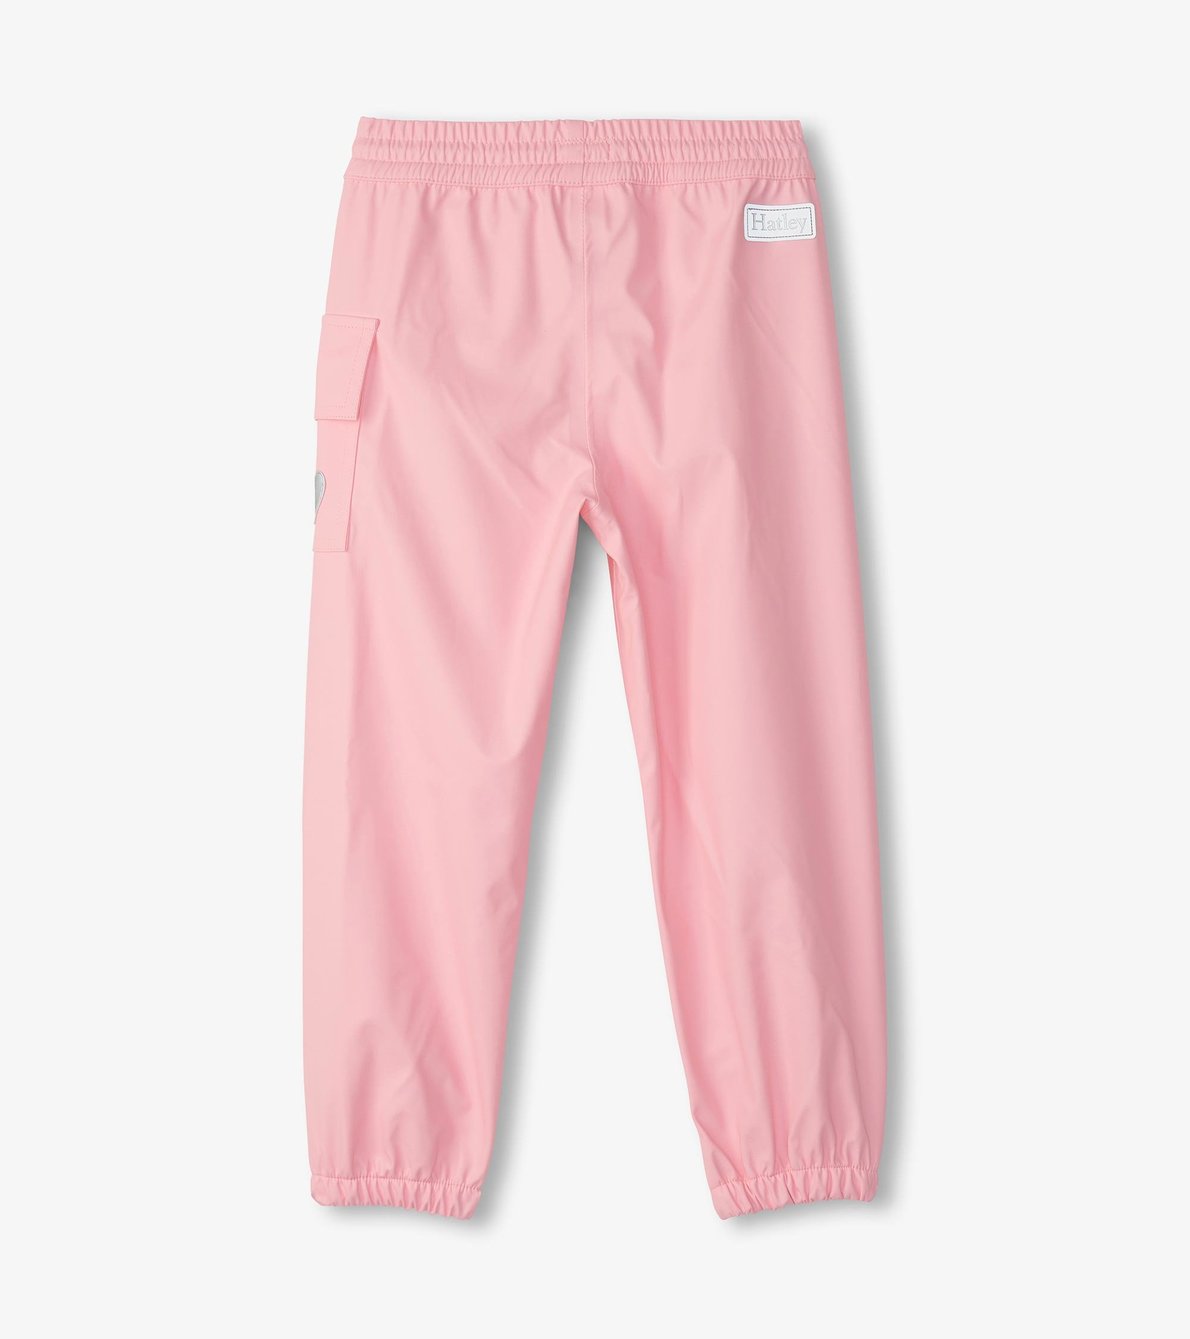 View larger image of Classic Pink Kids Rain Pants